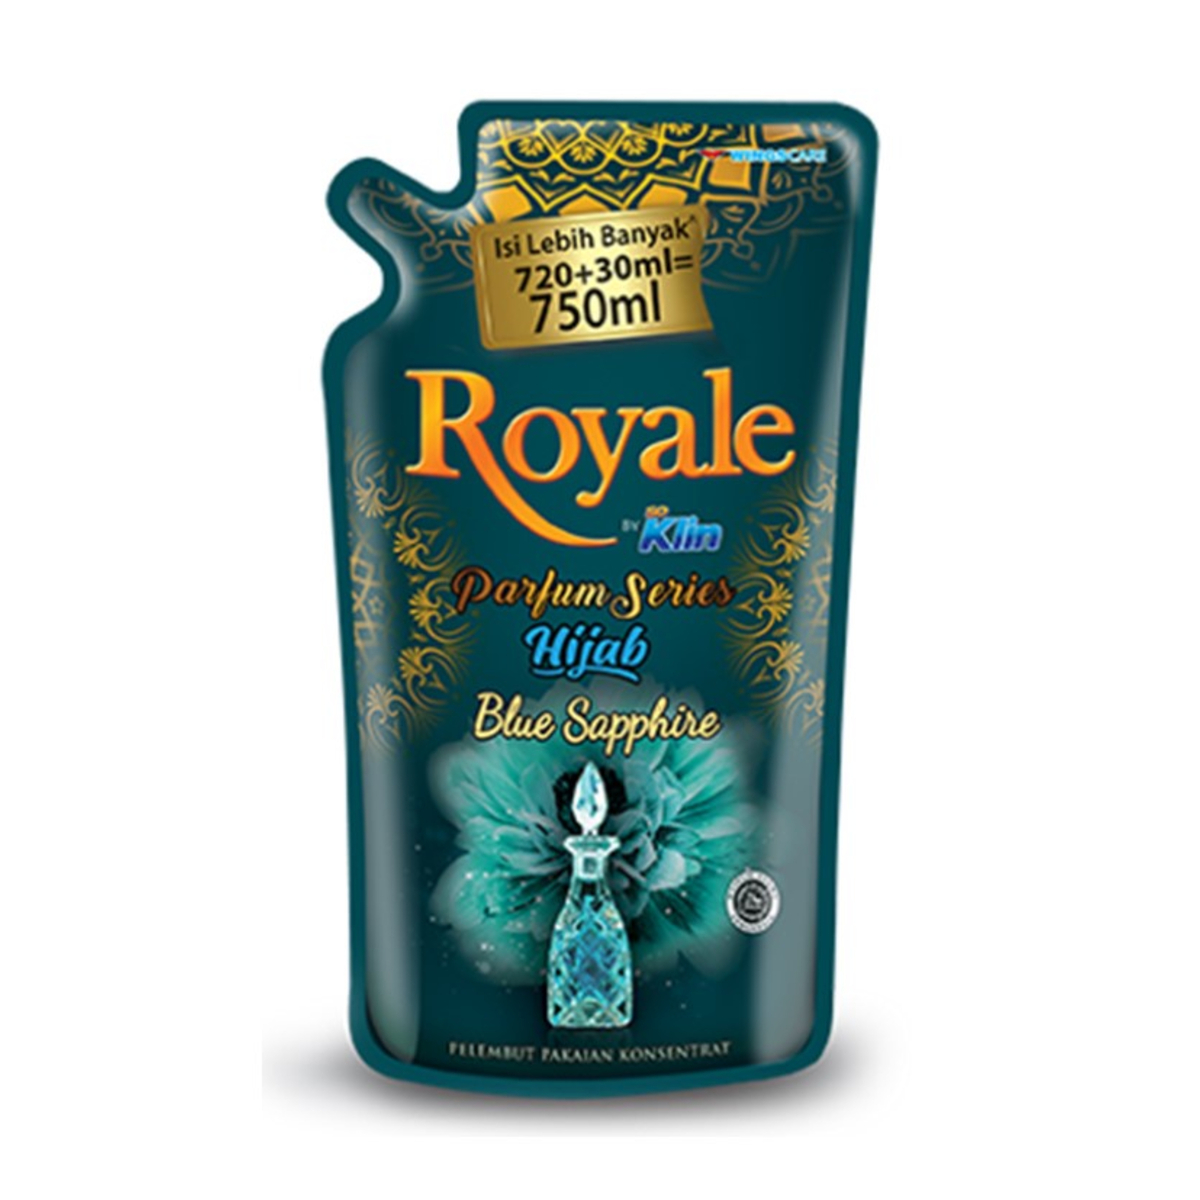 Royale Parfum Collection Hijab Blue Sapphire Refill 720ml